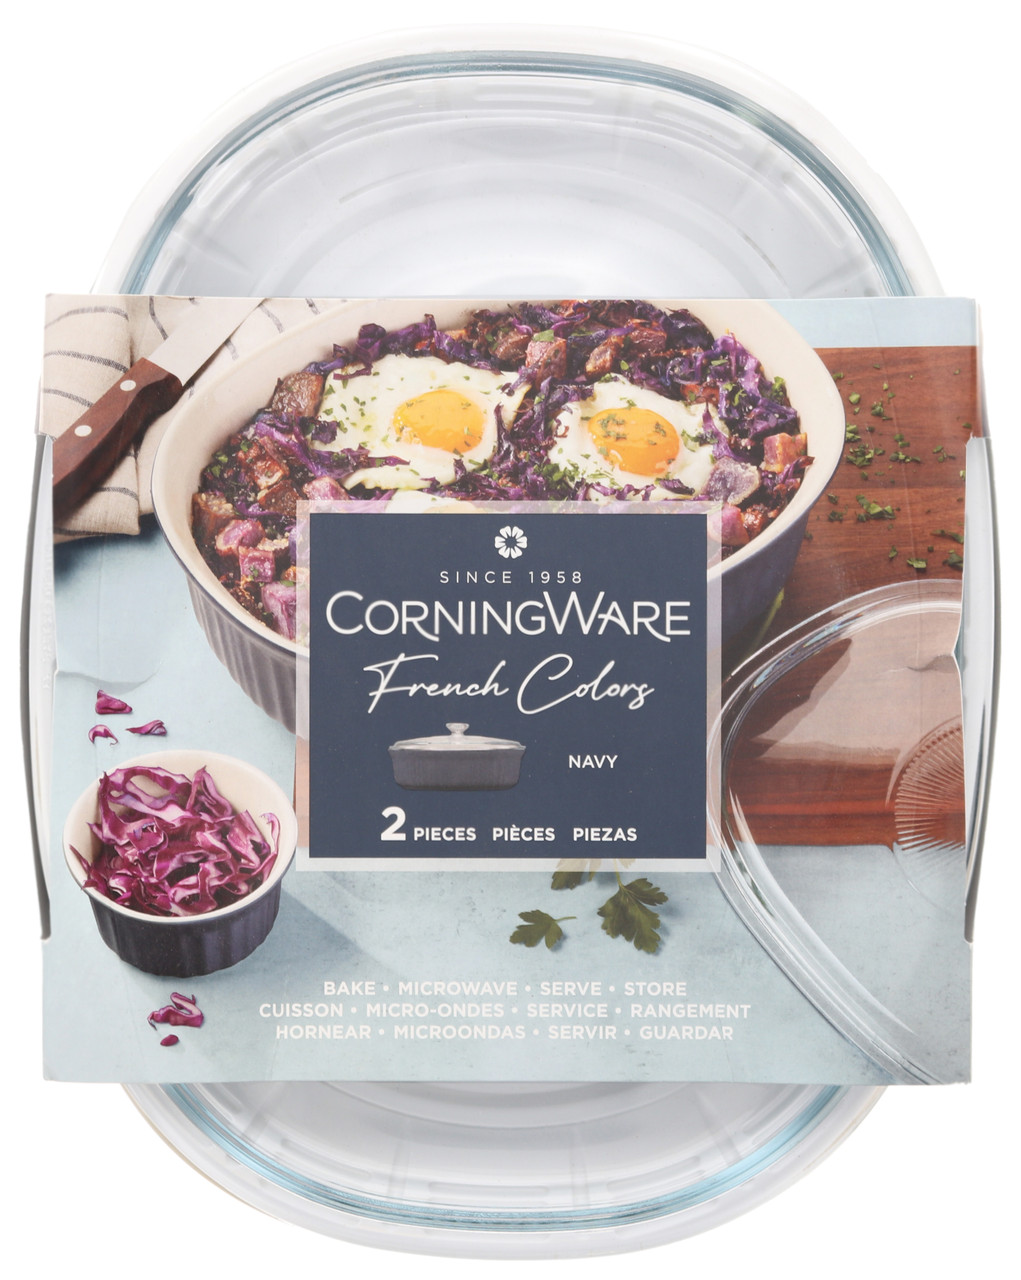 Corningware French Colors 2.5 Quart Navy Oval Baking Dish